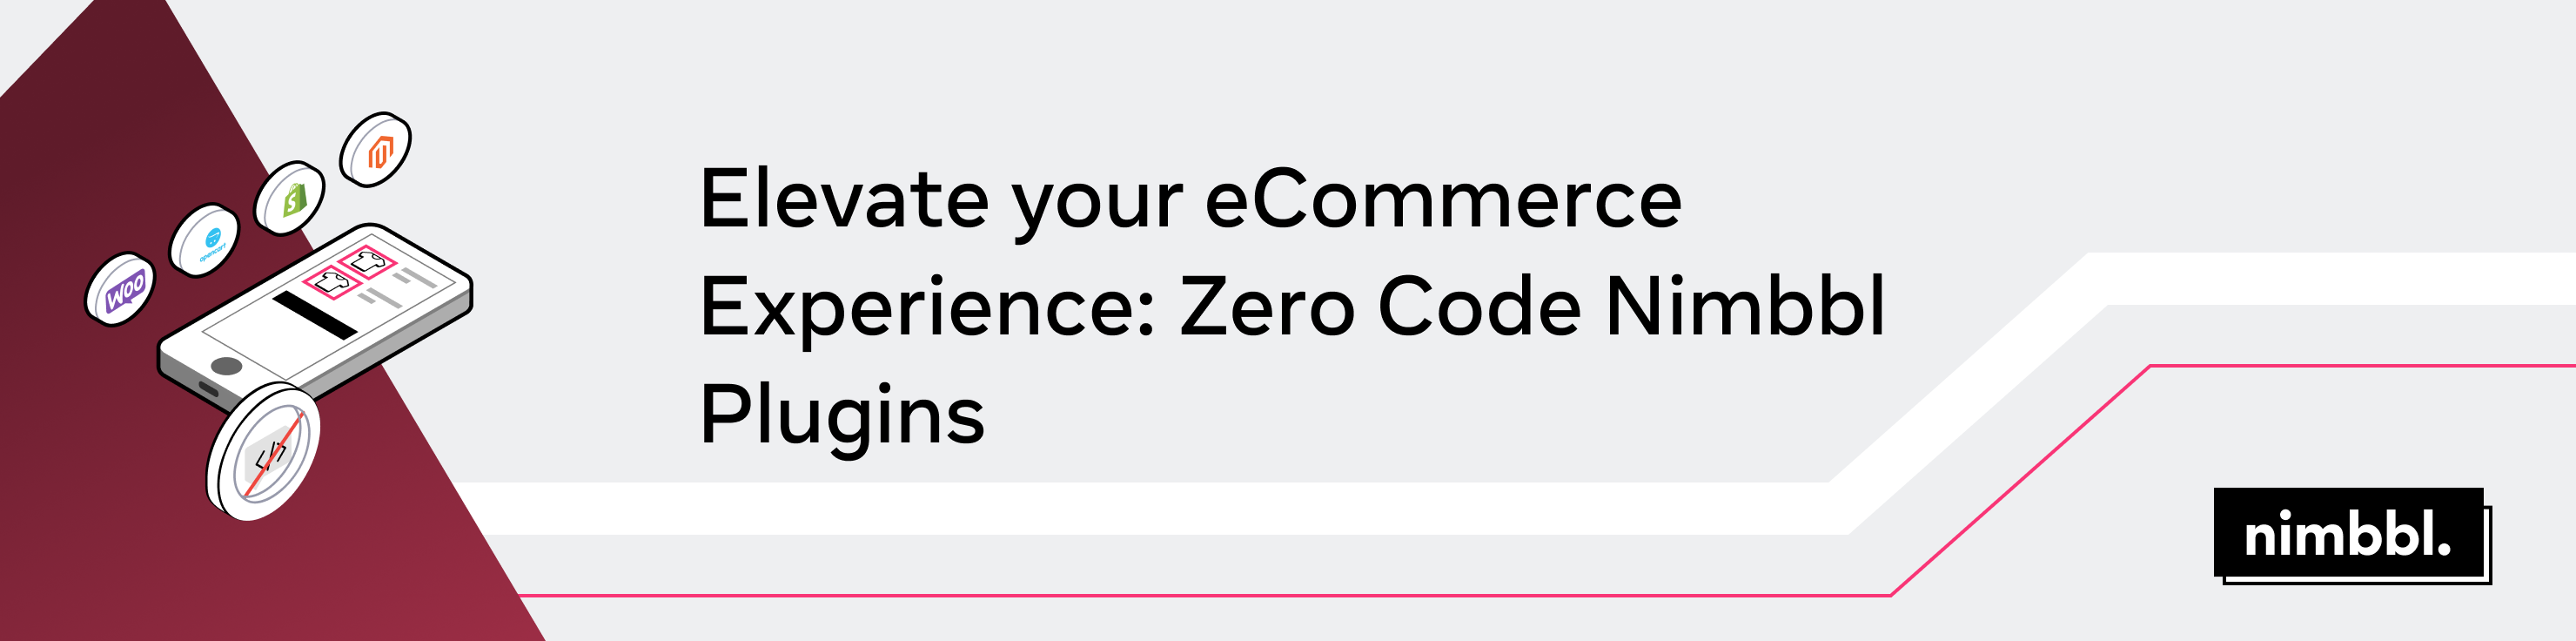 Elevate Your eCommerce Experience: Zero Code Nimbbl Plugins